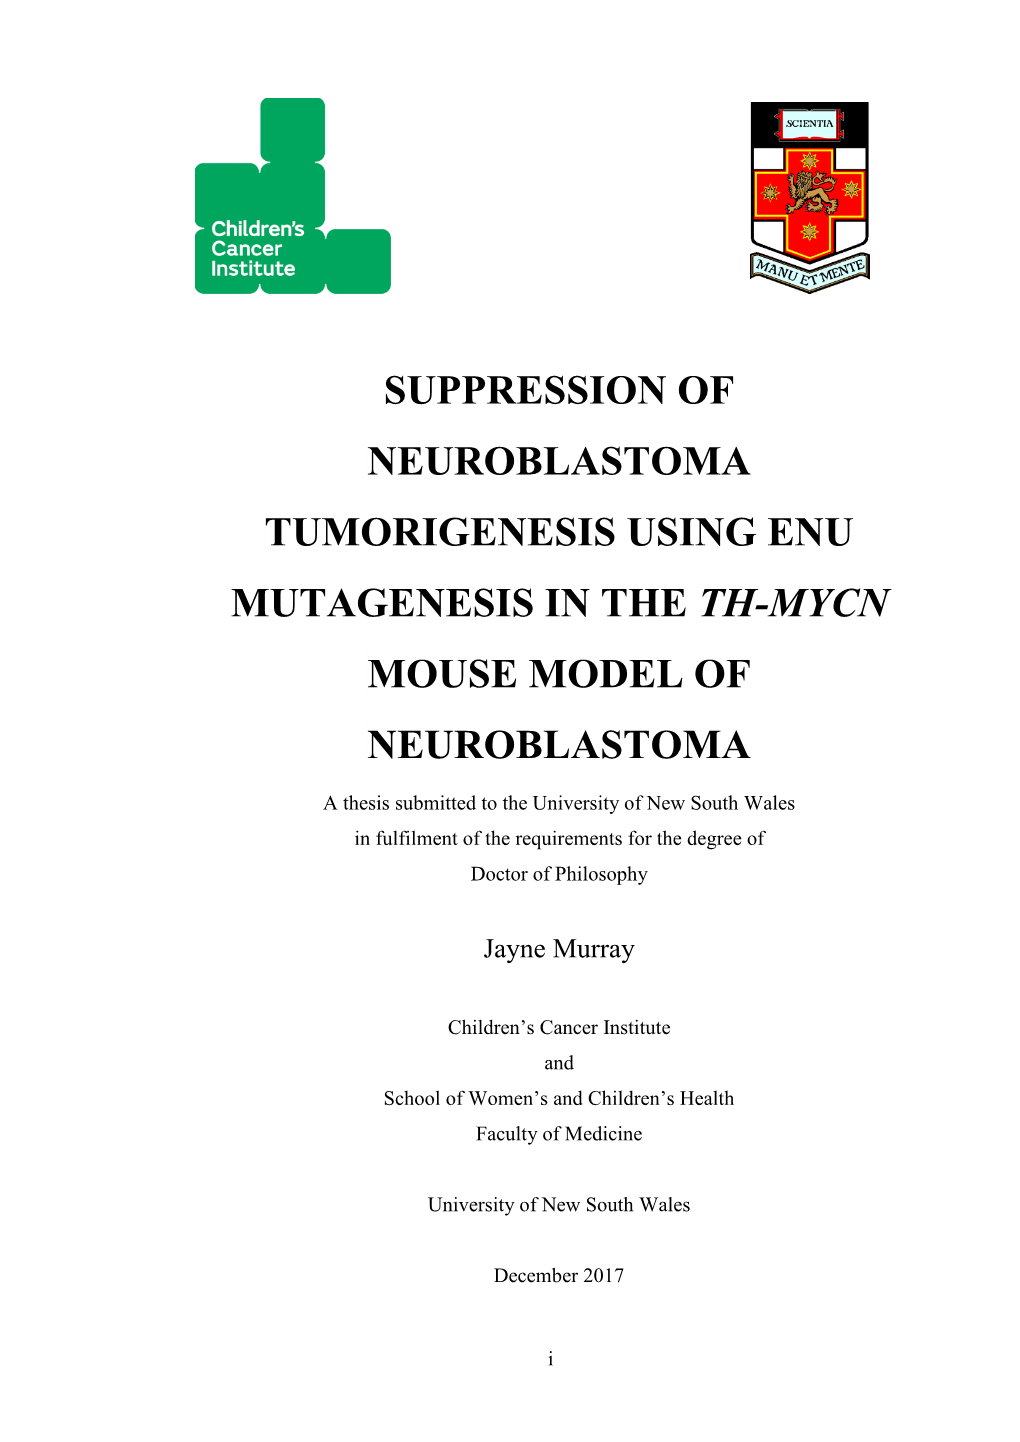 Suppression of Neuroblastoma Tumorigenesis Using Enu Mutagenesis in the Th-Mycn Mouse Model of Neuroblastoma